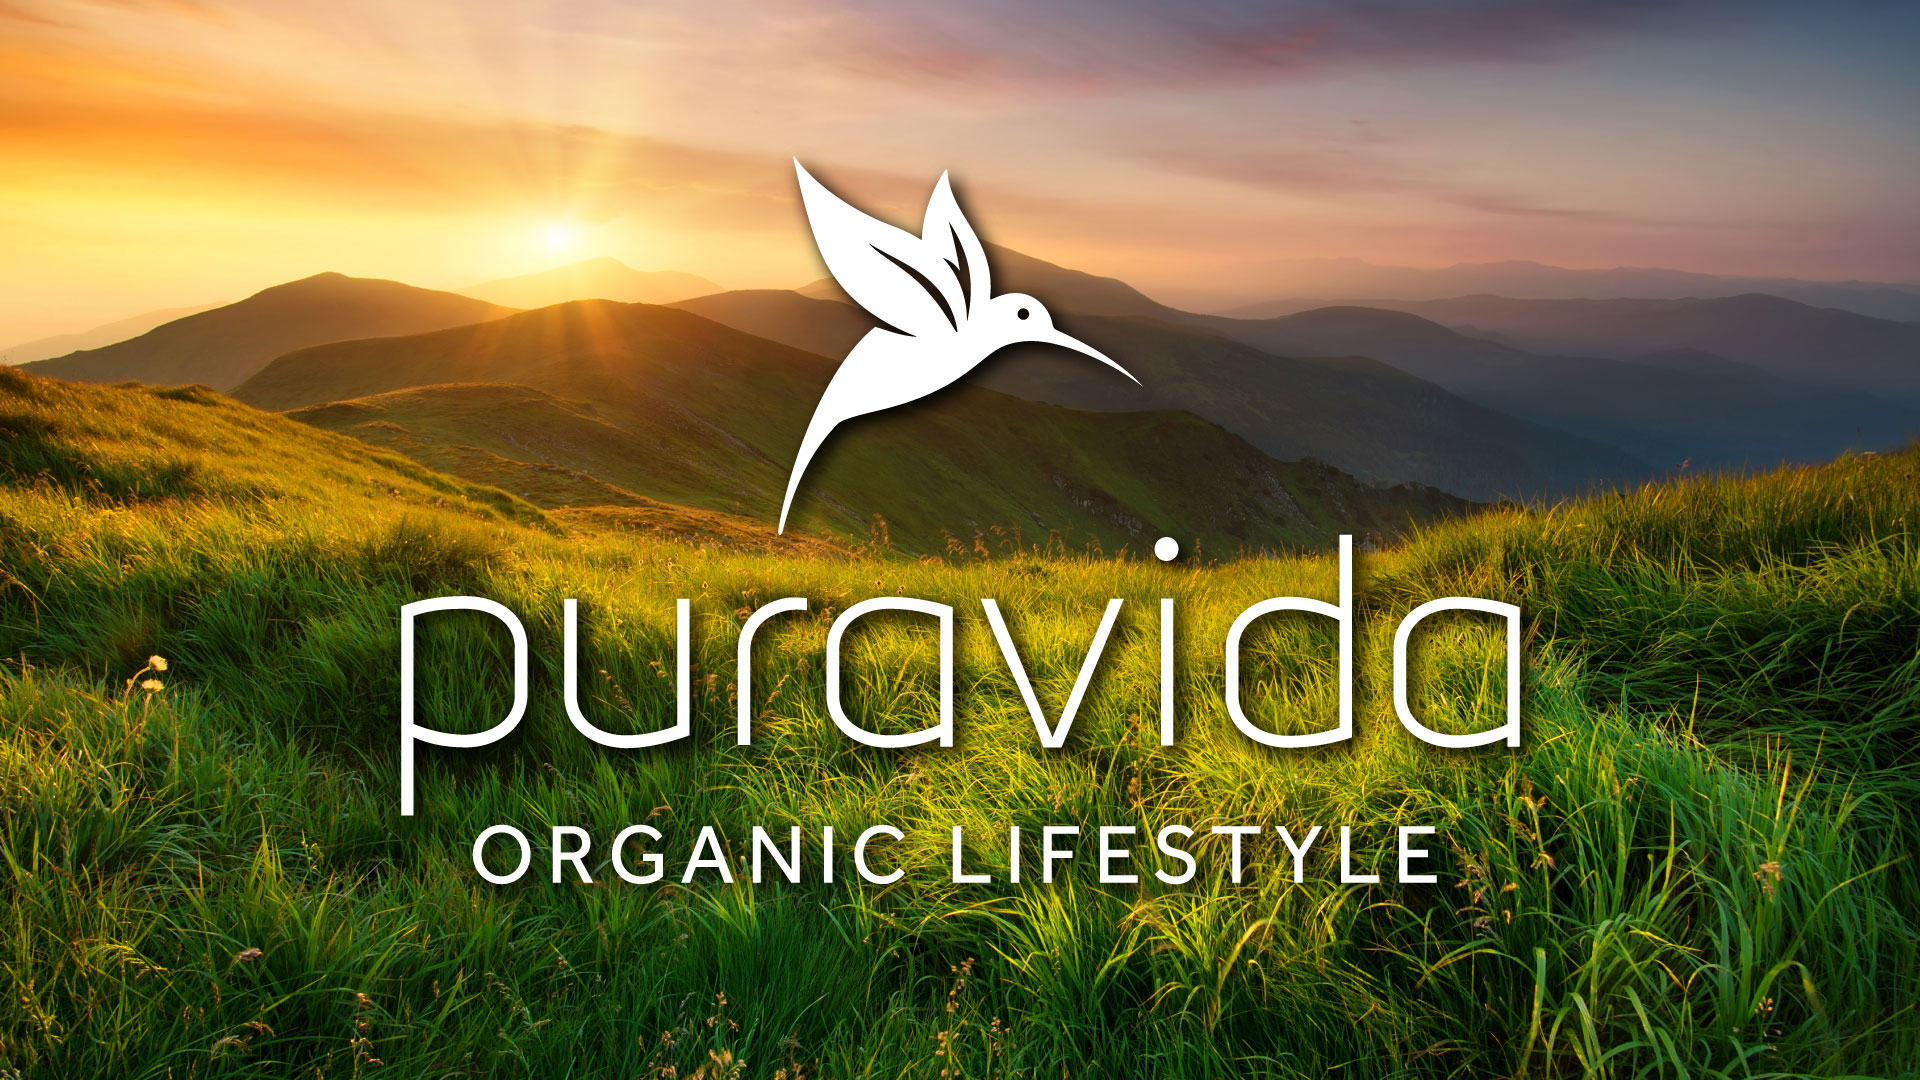 Puravida for natural and organic food products